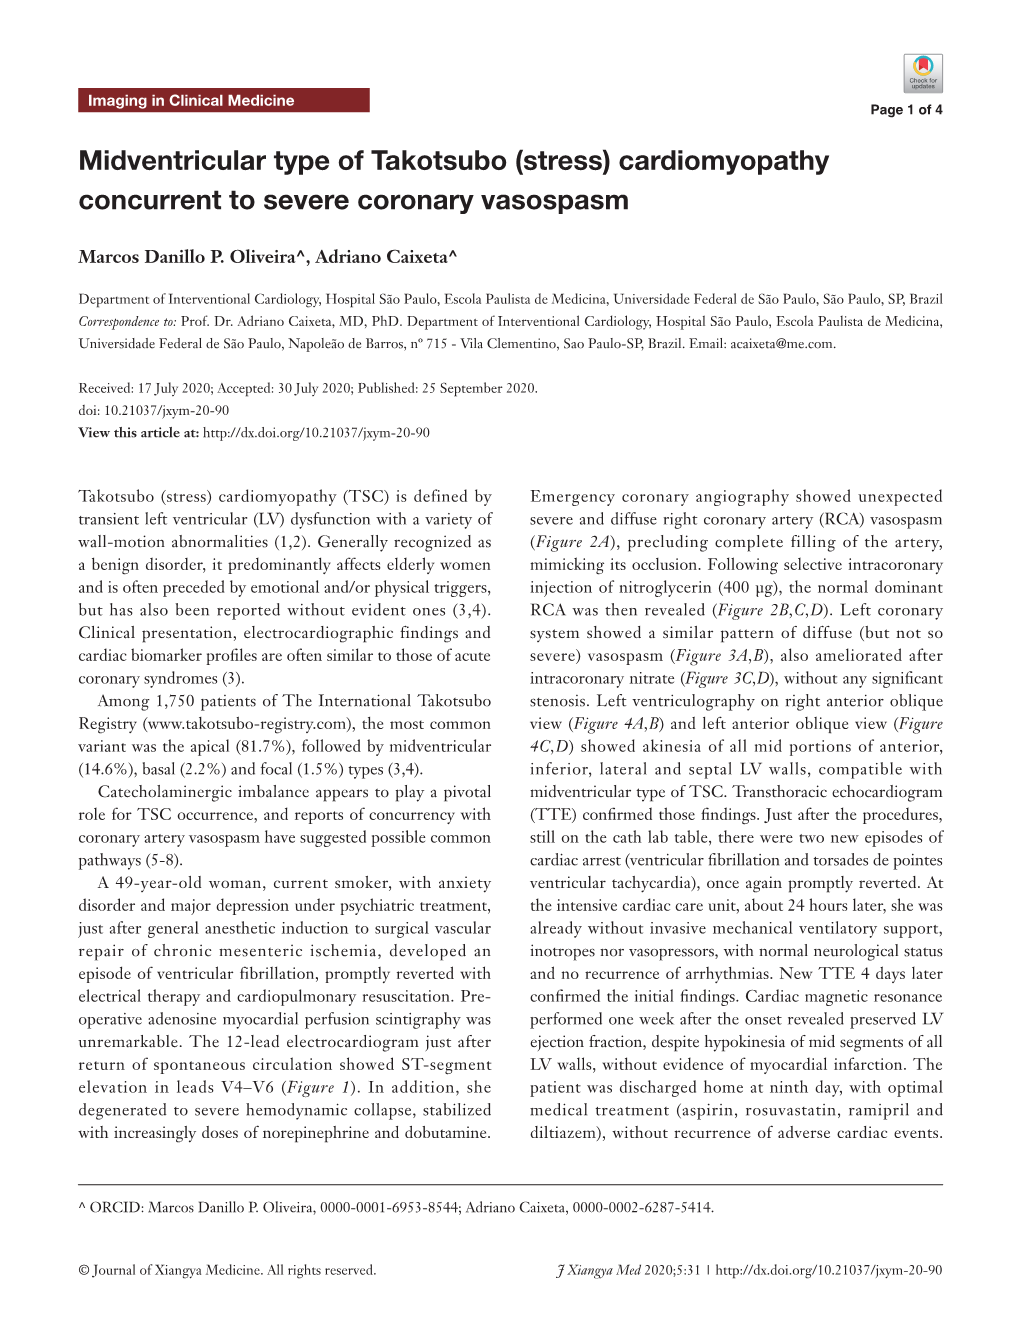 (Stress) Cardiomyopathy Concurrent to Severe Coronary Vasospasm